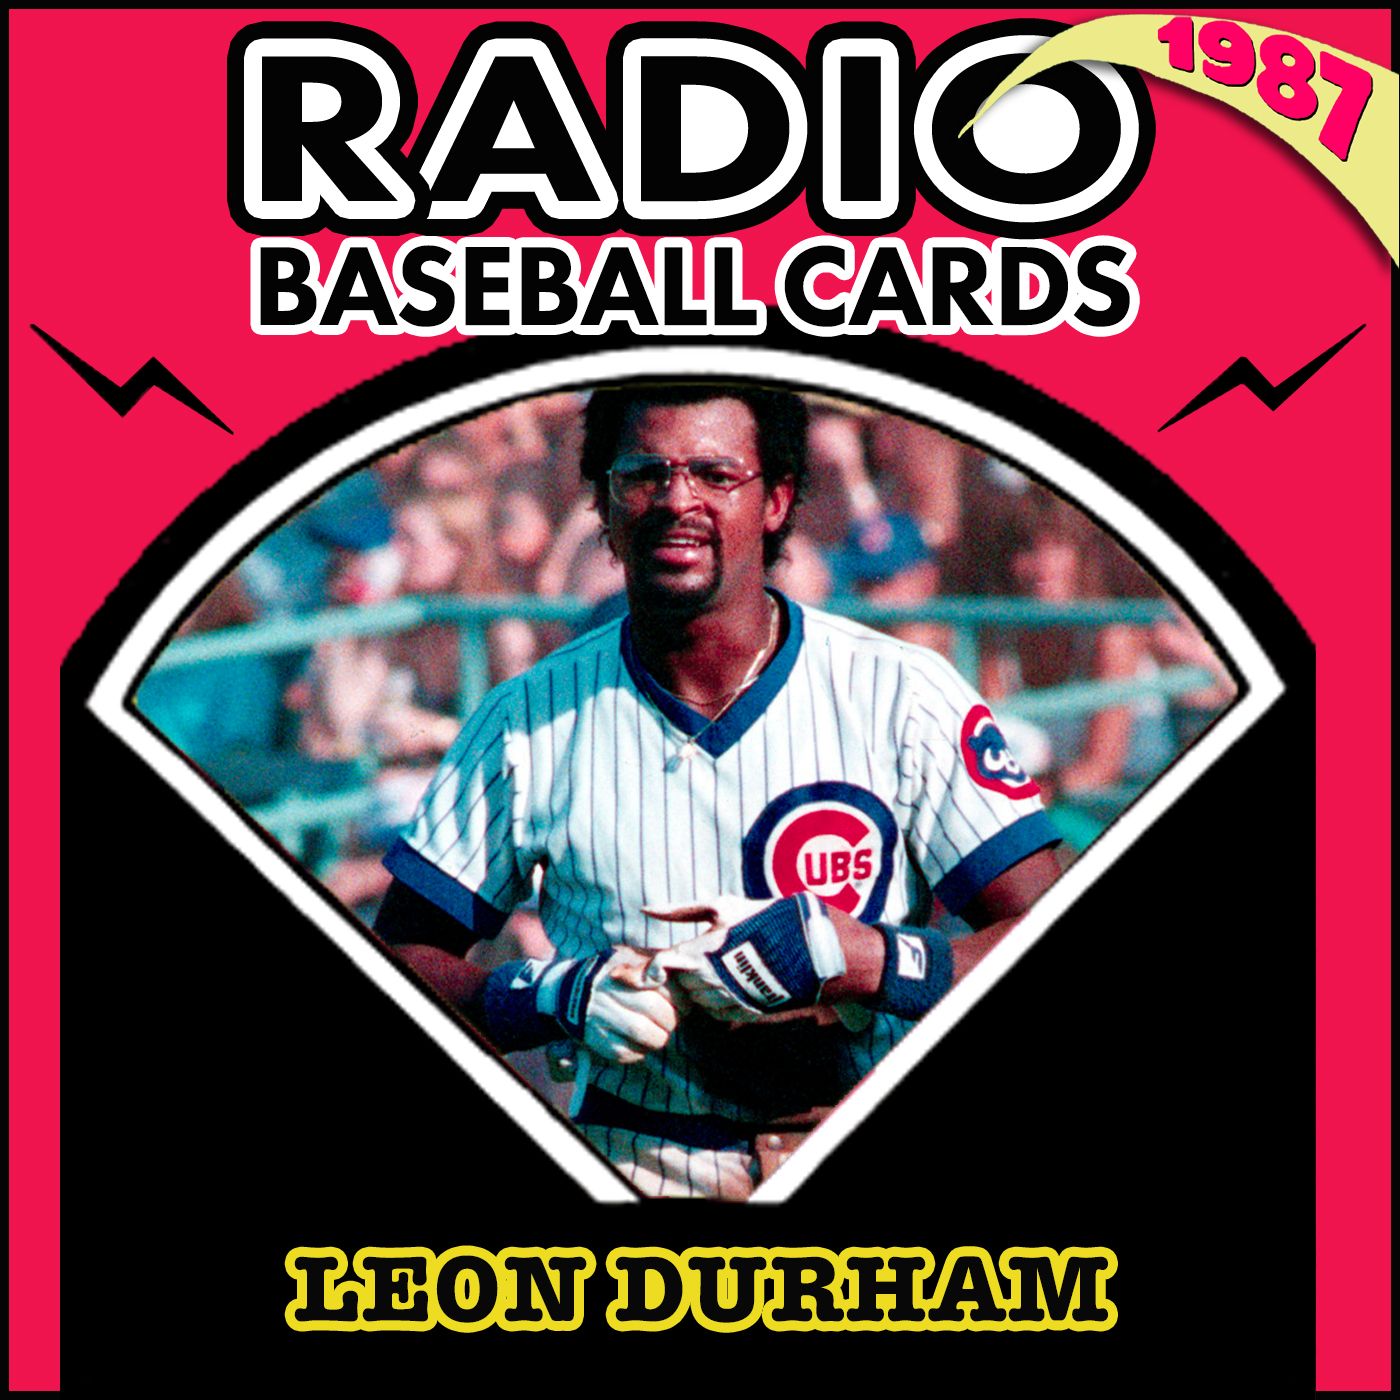 Leon Durham Believes in Baseball Superstitions